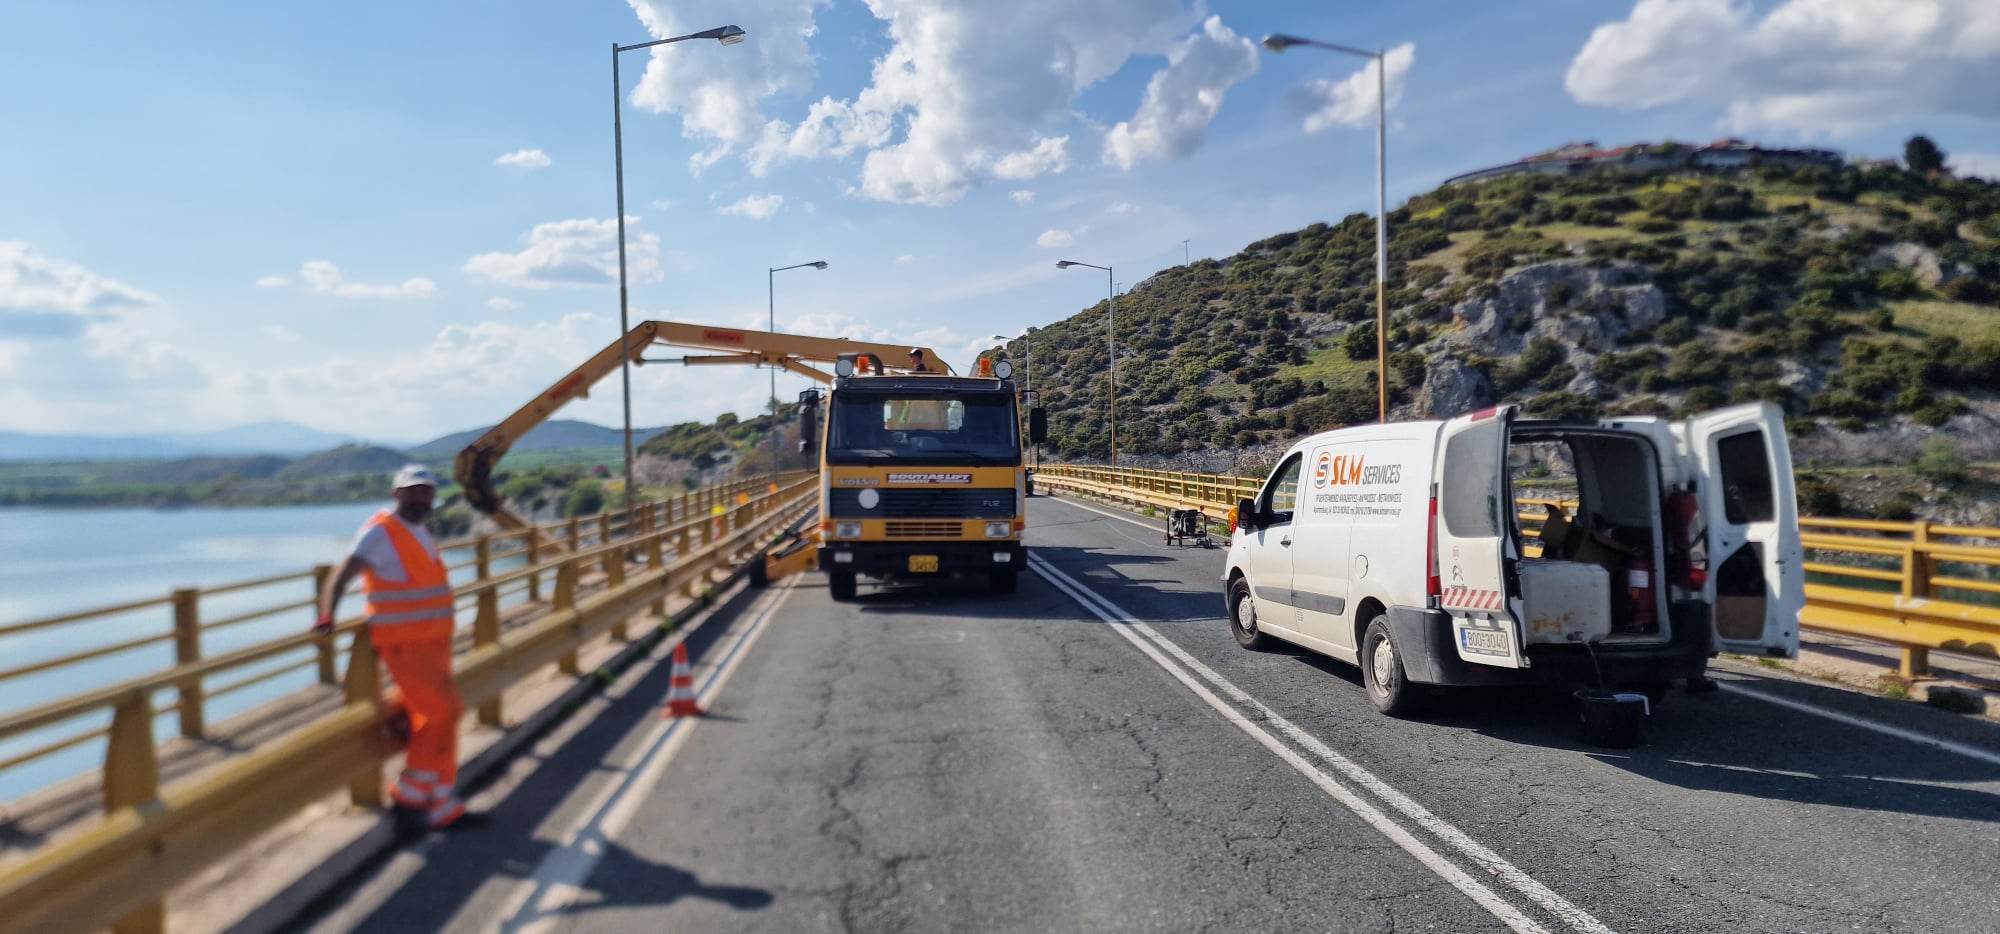 Eordaialive.com - Τα Νέα της Πτολεμαΐδας, Εορδαίας, Κοζάνης Ολοκληρώθηκε χωρίς προβλήματα η δεύτερη φάση εργασιών στην Υψηλή Γέφυρα Σερβίων